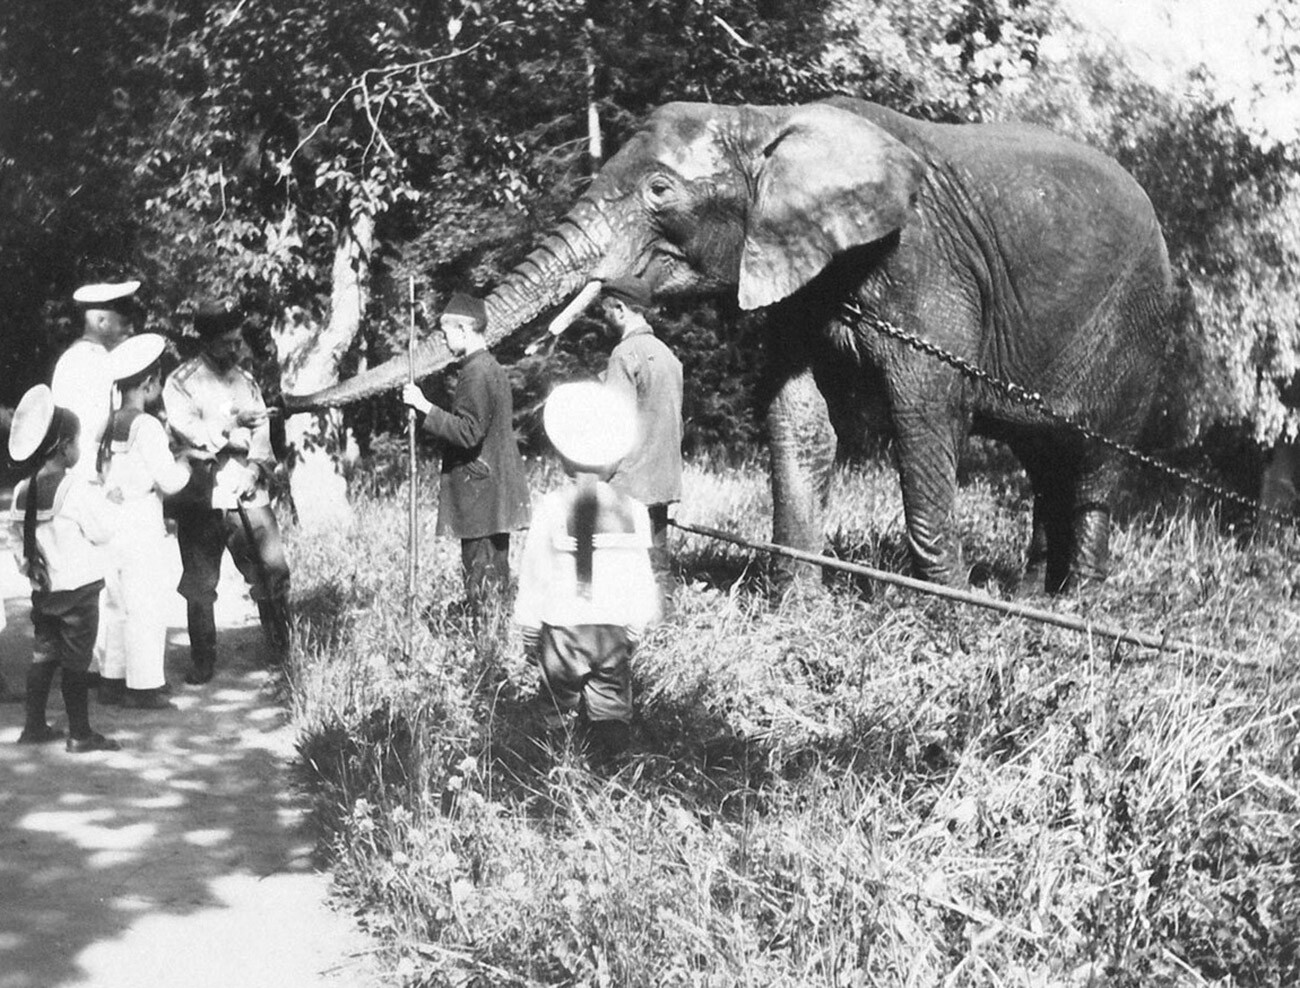 Nicholas II feeds the elephant in Tsarskoye Selo